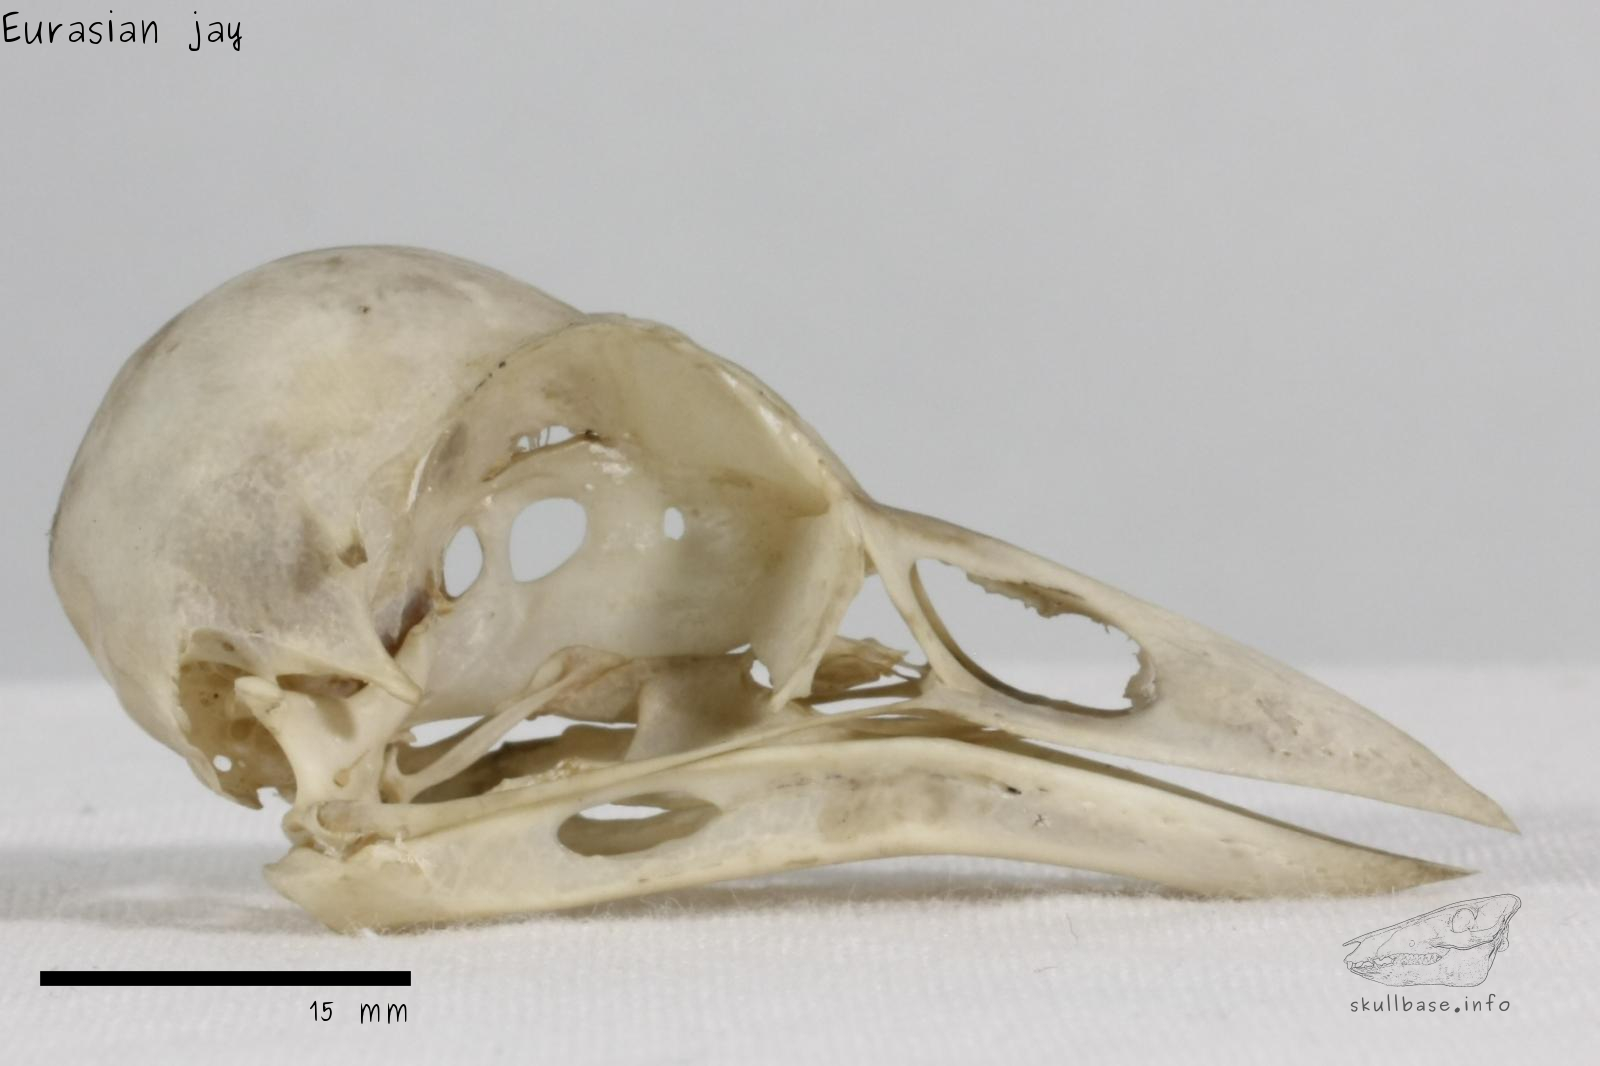 Eurasian jay (Garrulus glandarius) skull lateral view